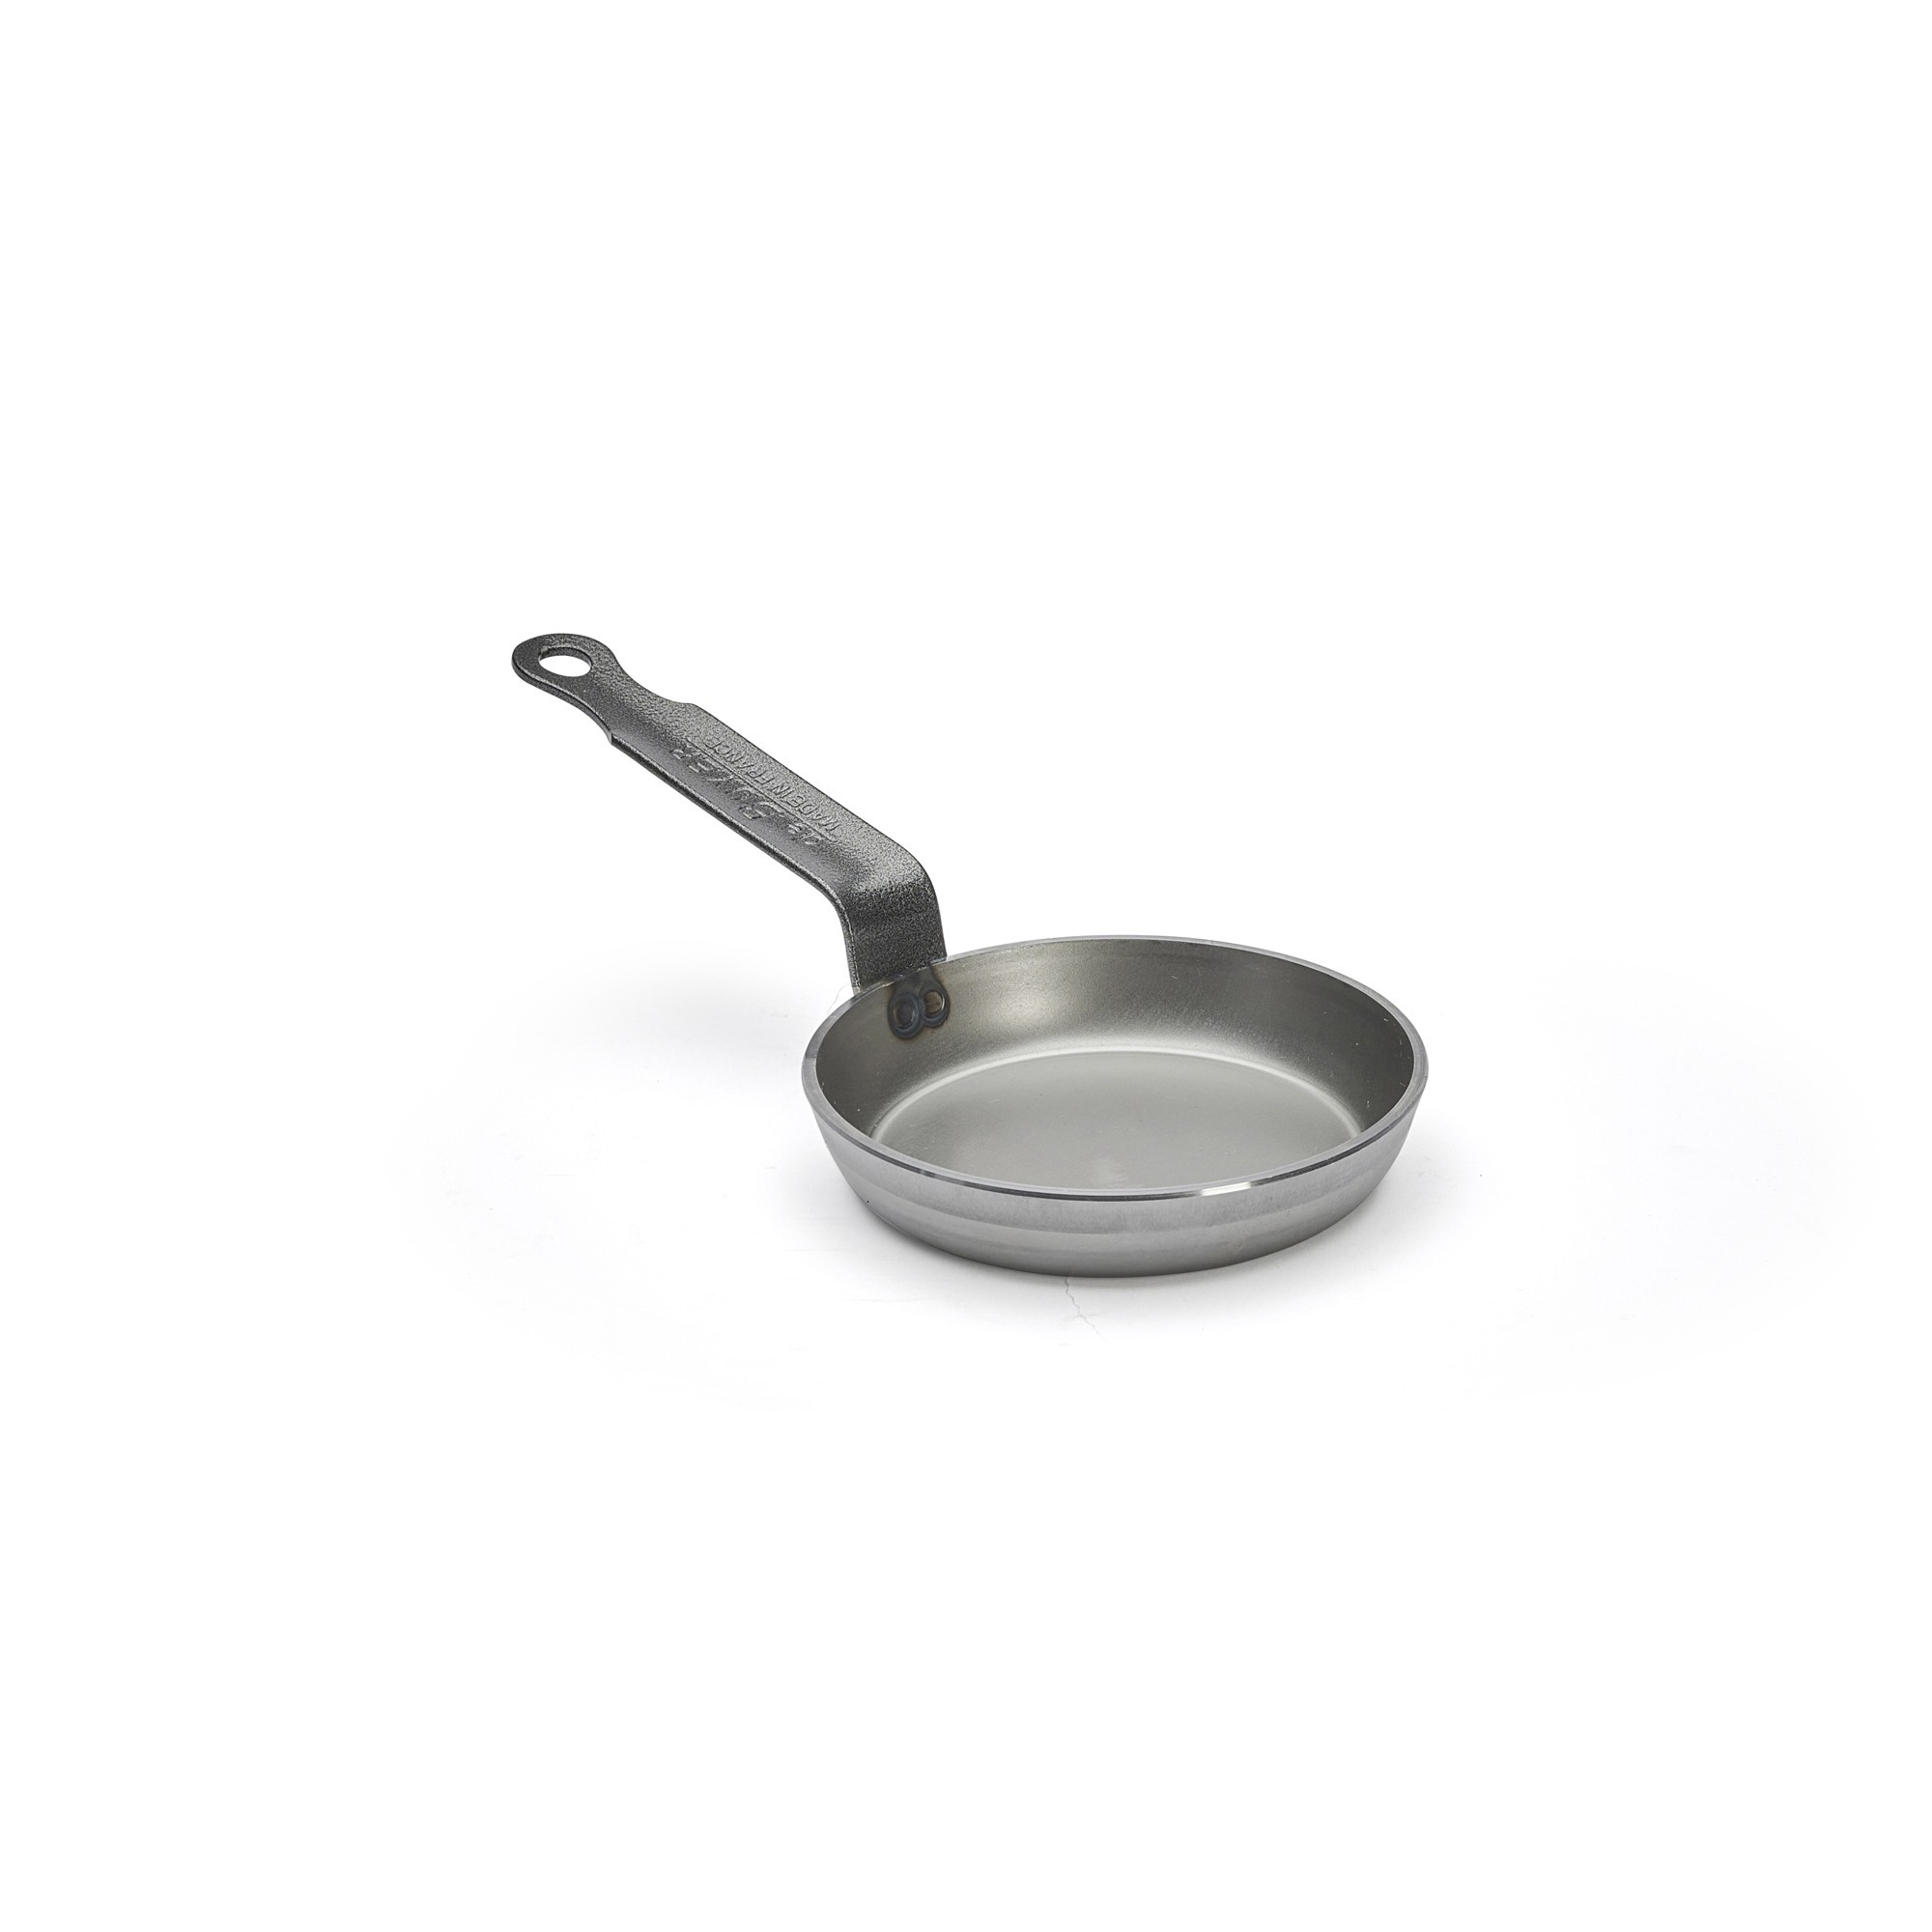 Pancake pan MINERAL B ELEMENT 27 cm, steel, de Buyer 